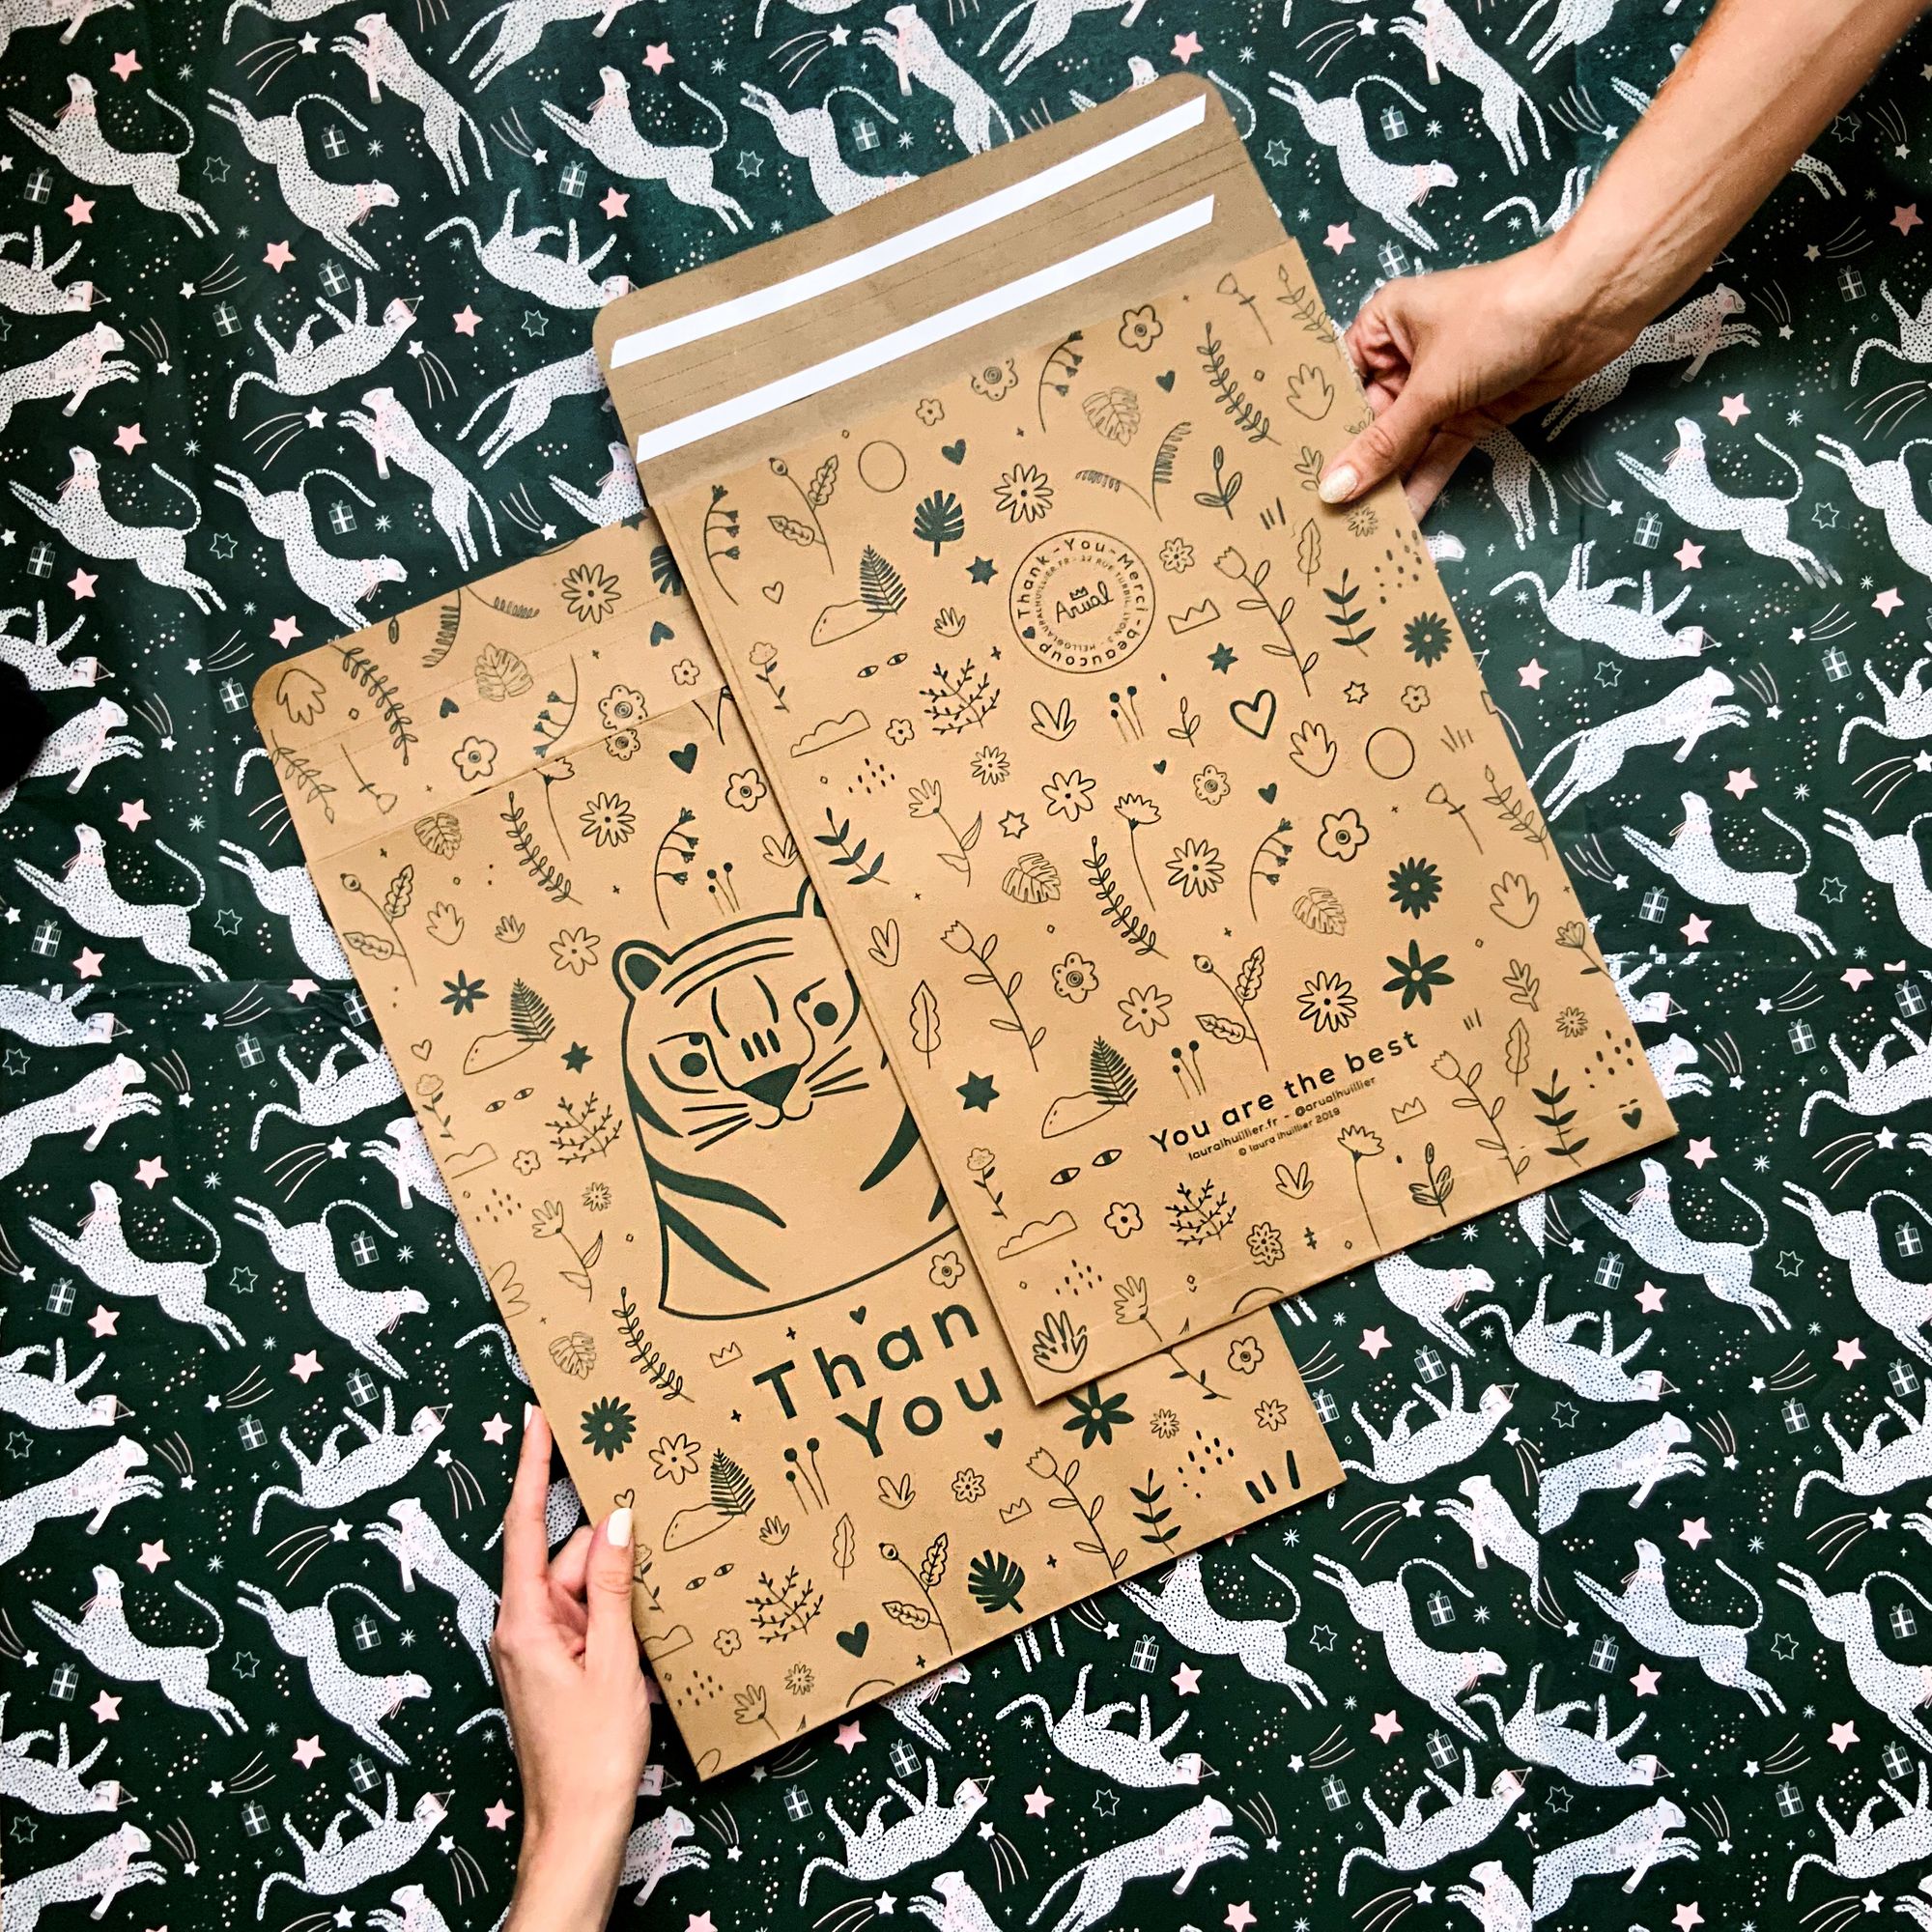 Custom mailer bag with illustrations